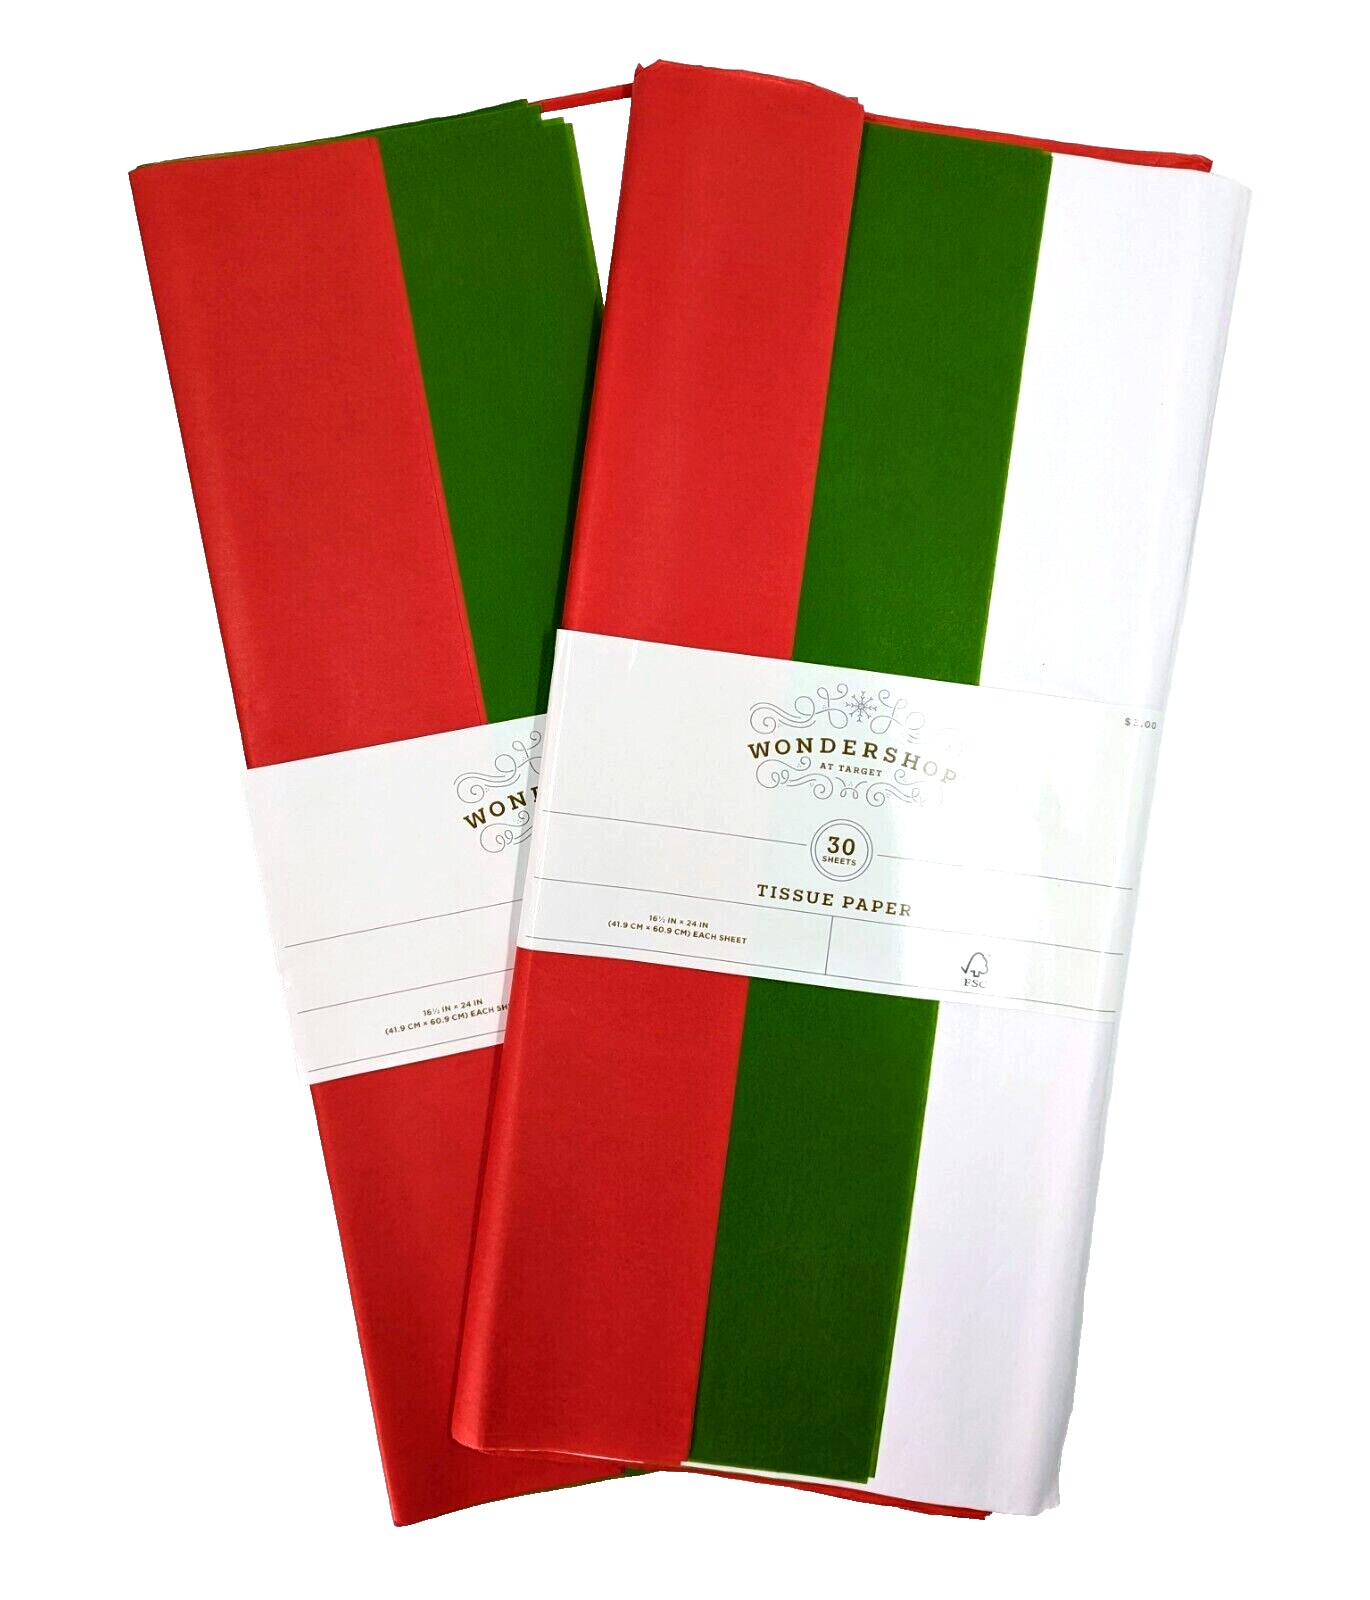 SallyFashion 150 PCS Christmas Gift Tags with String, Kraft Paper